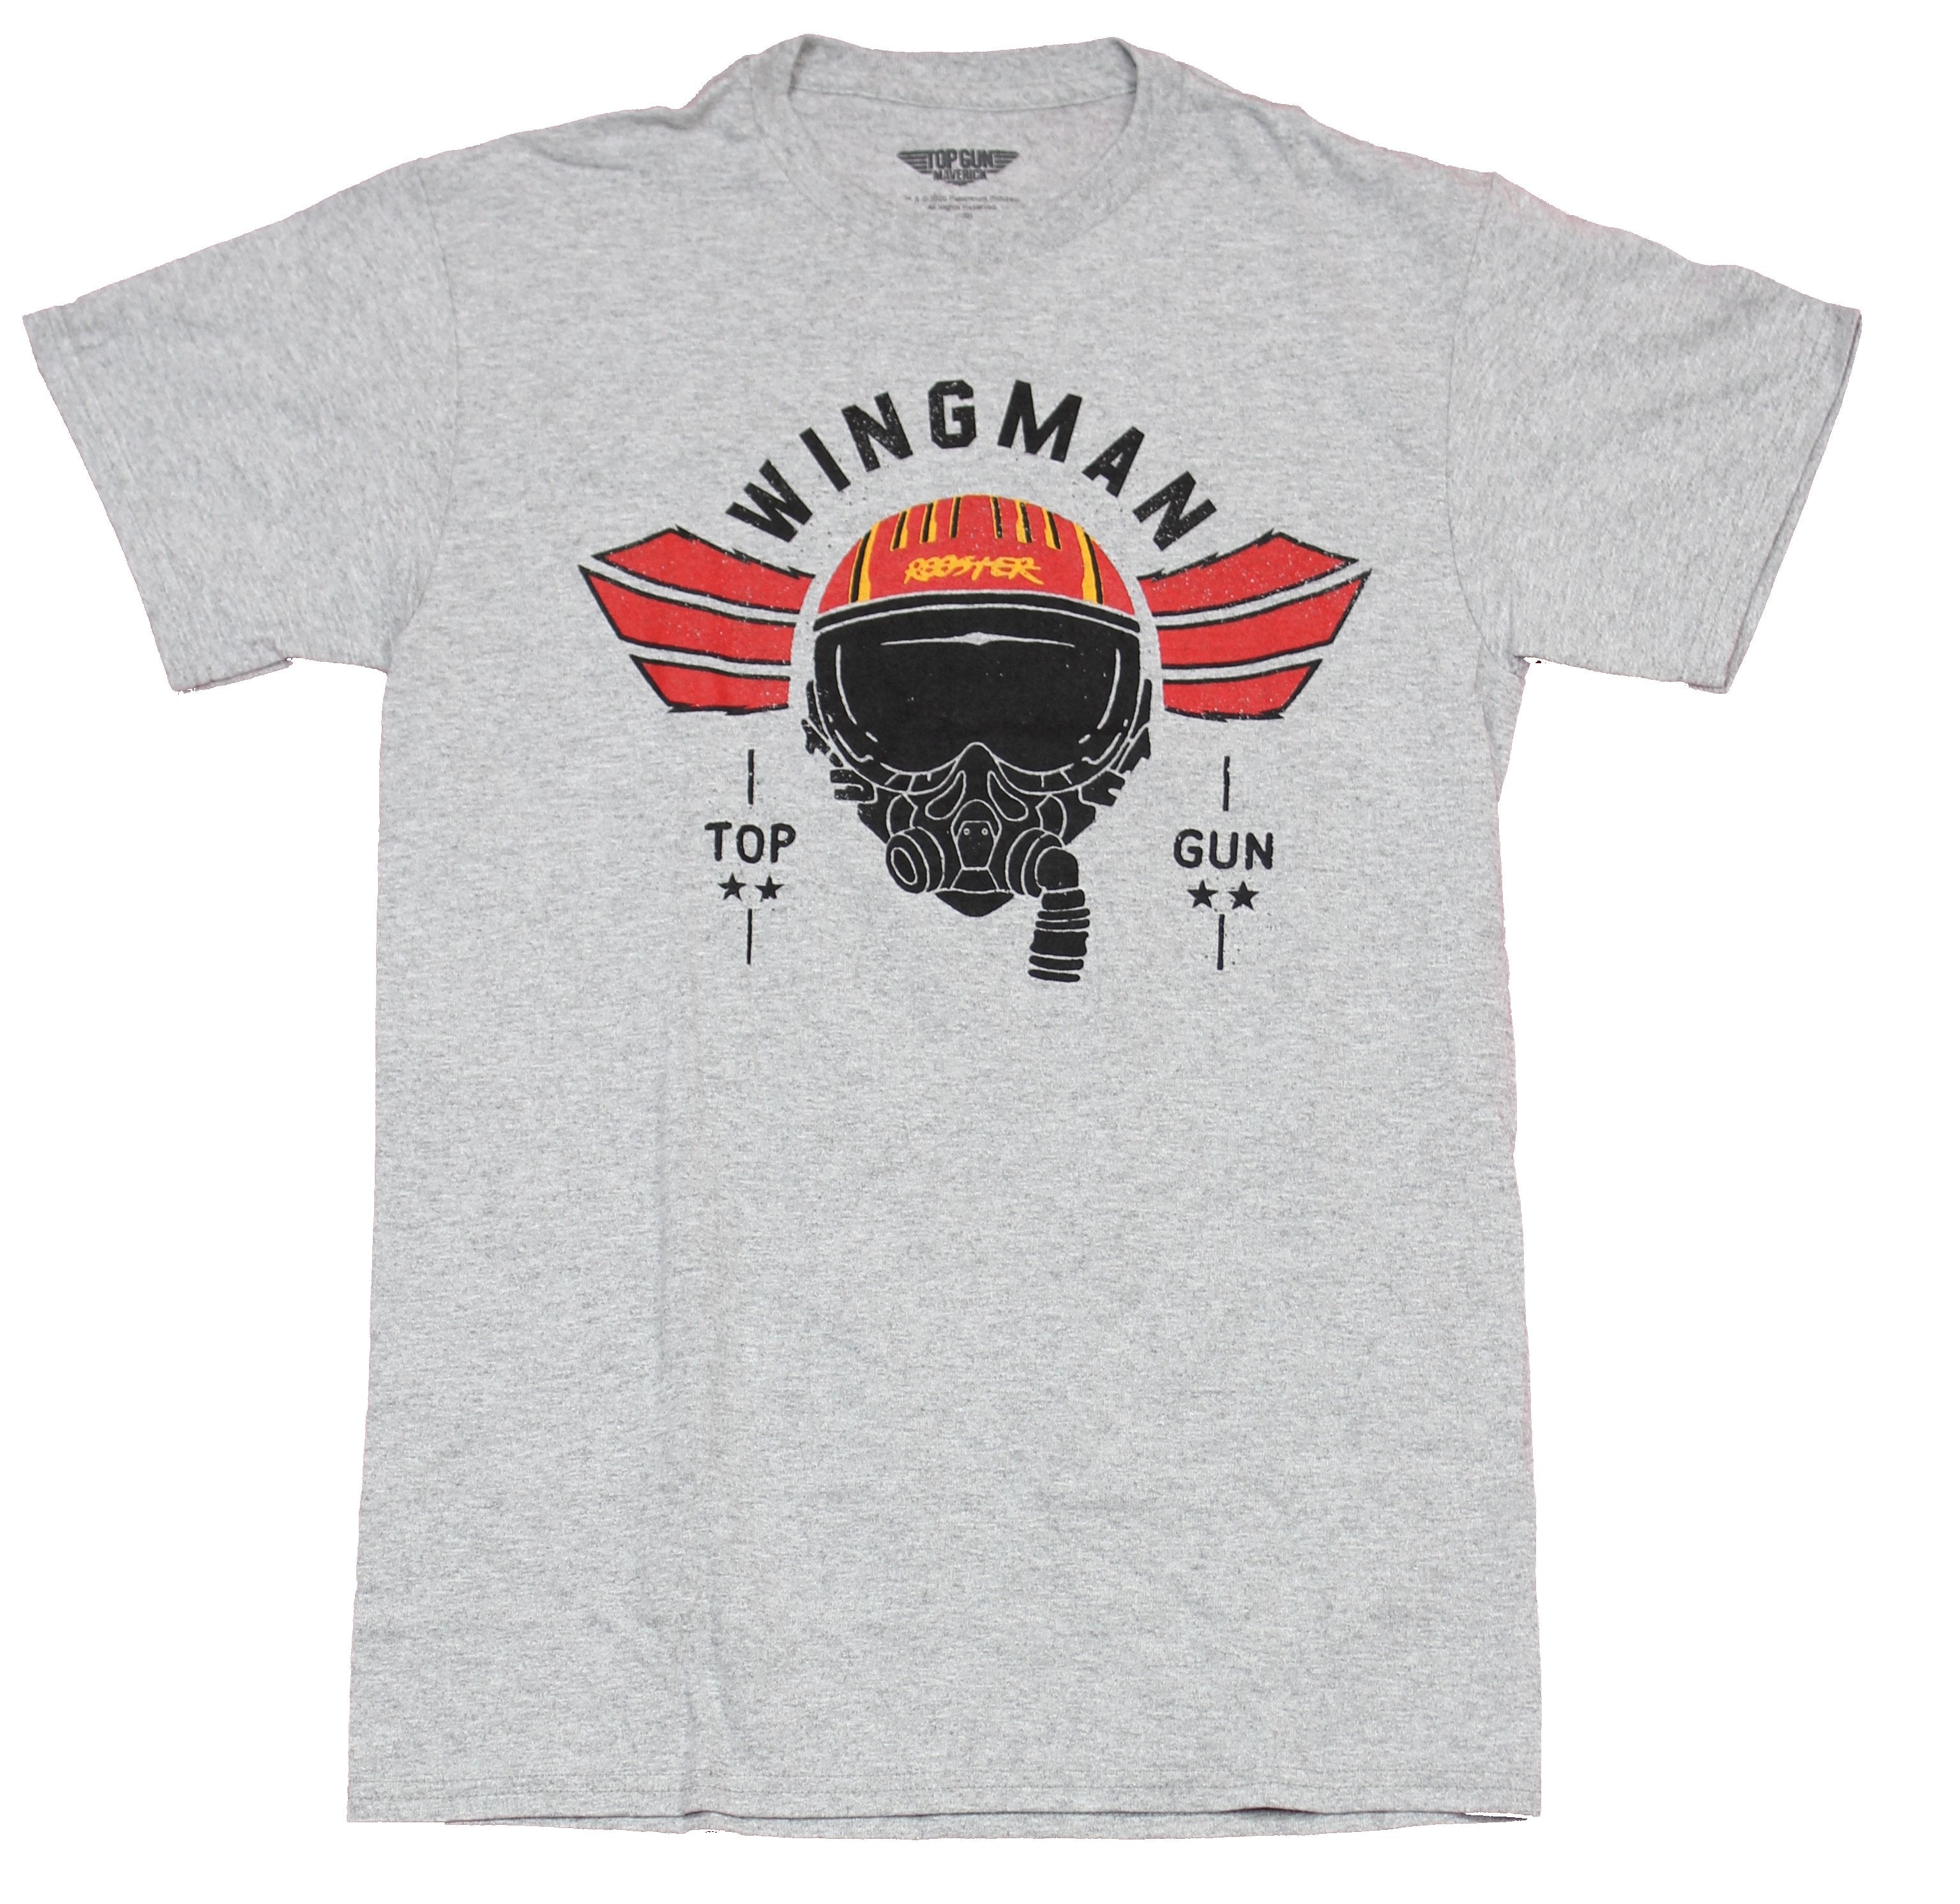 Top Gun Mens T-Shirt - Wingman Wingman Rooster Winged Helmet Image (3X-Large)